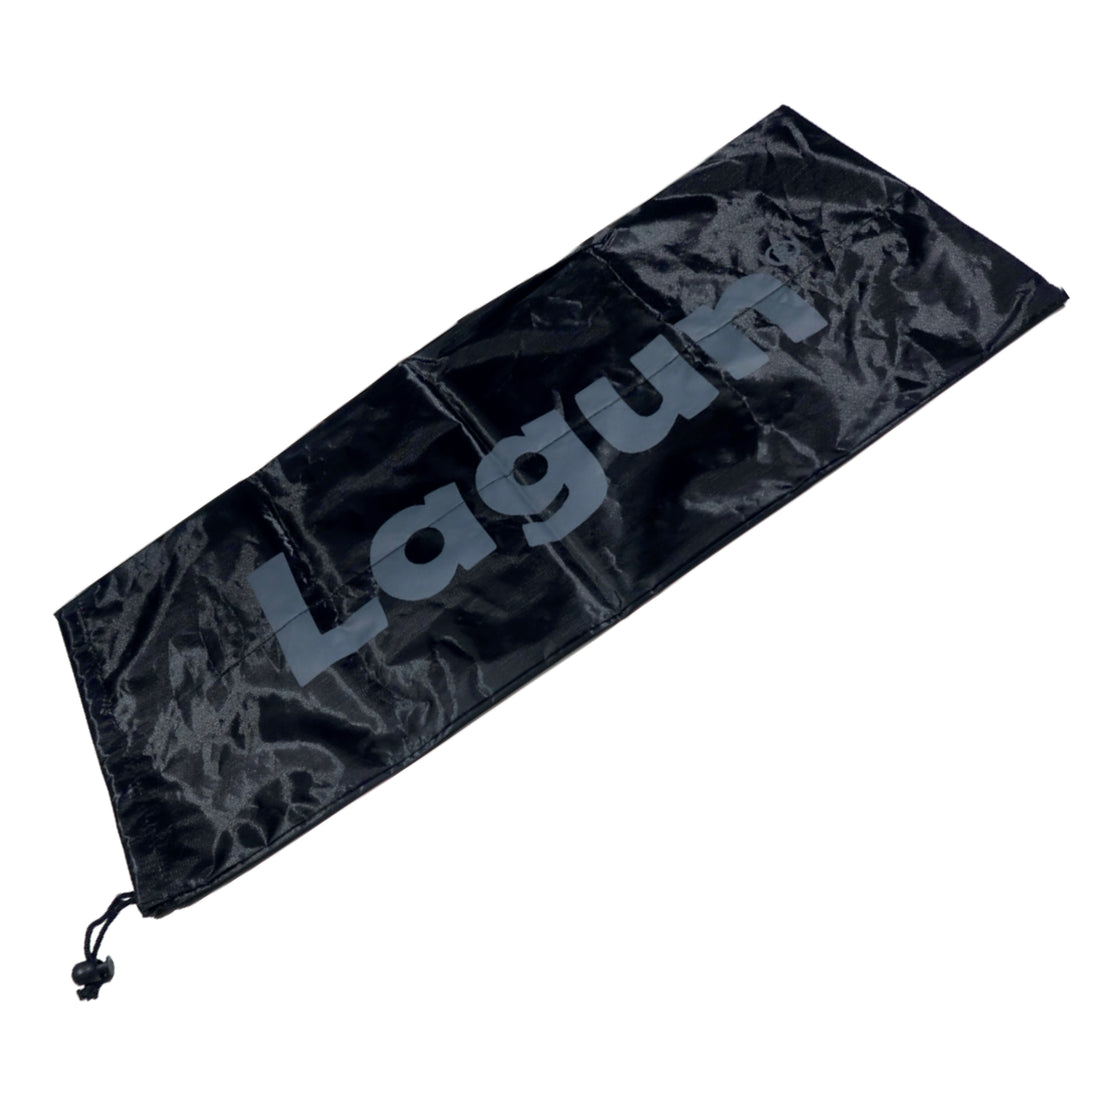 Lagun bag for additional parts